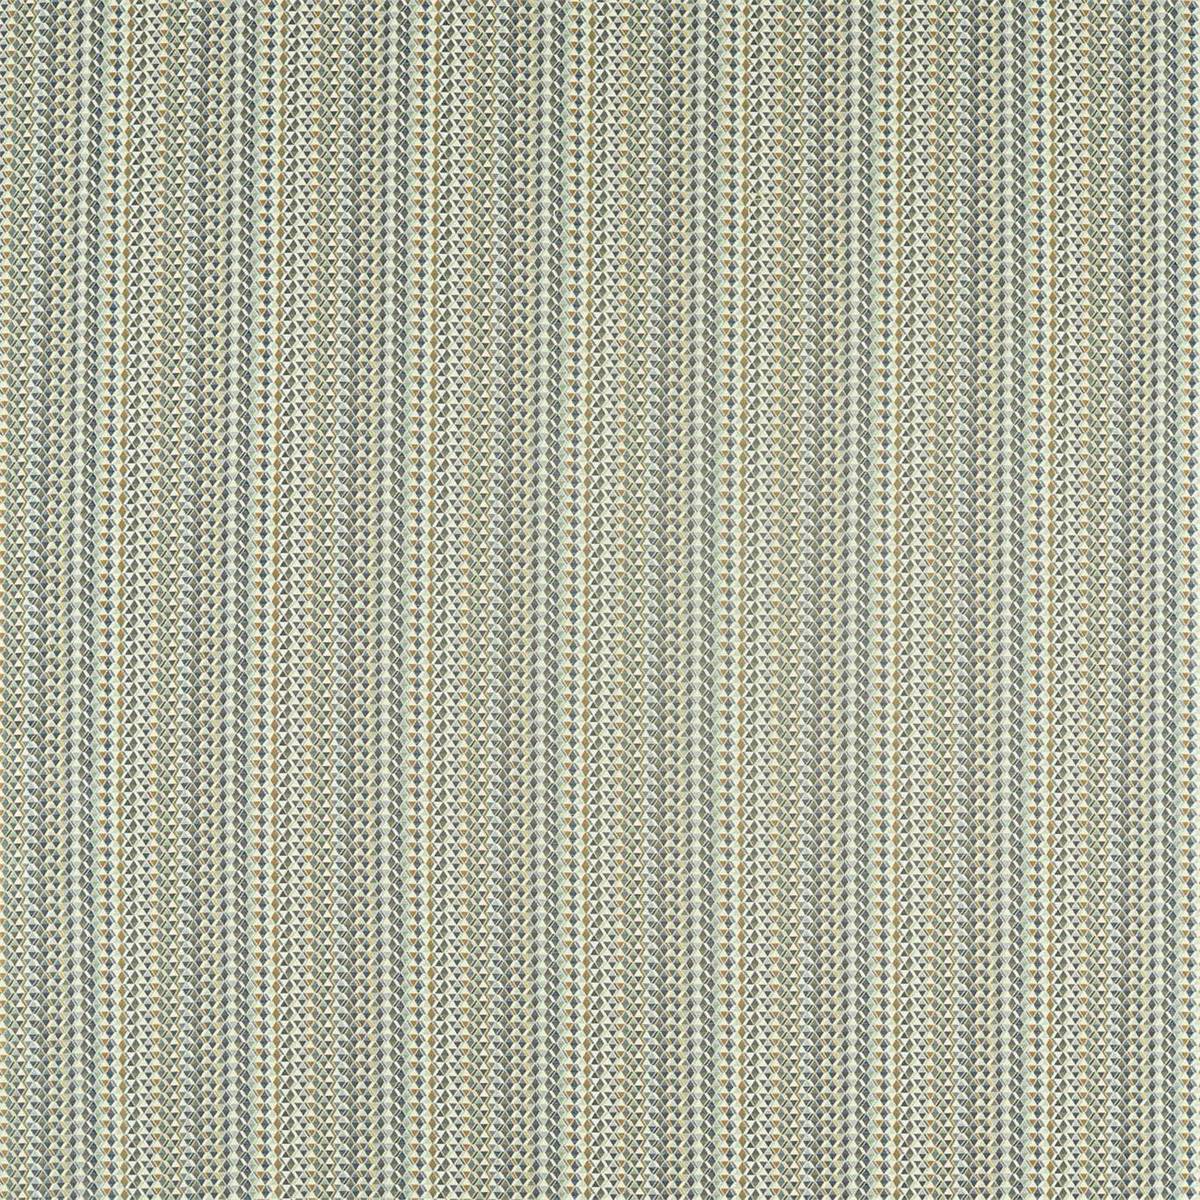 Concentric Coast Fabric by Scion